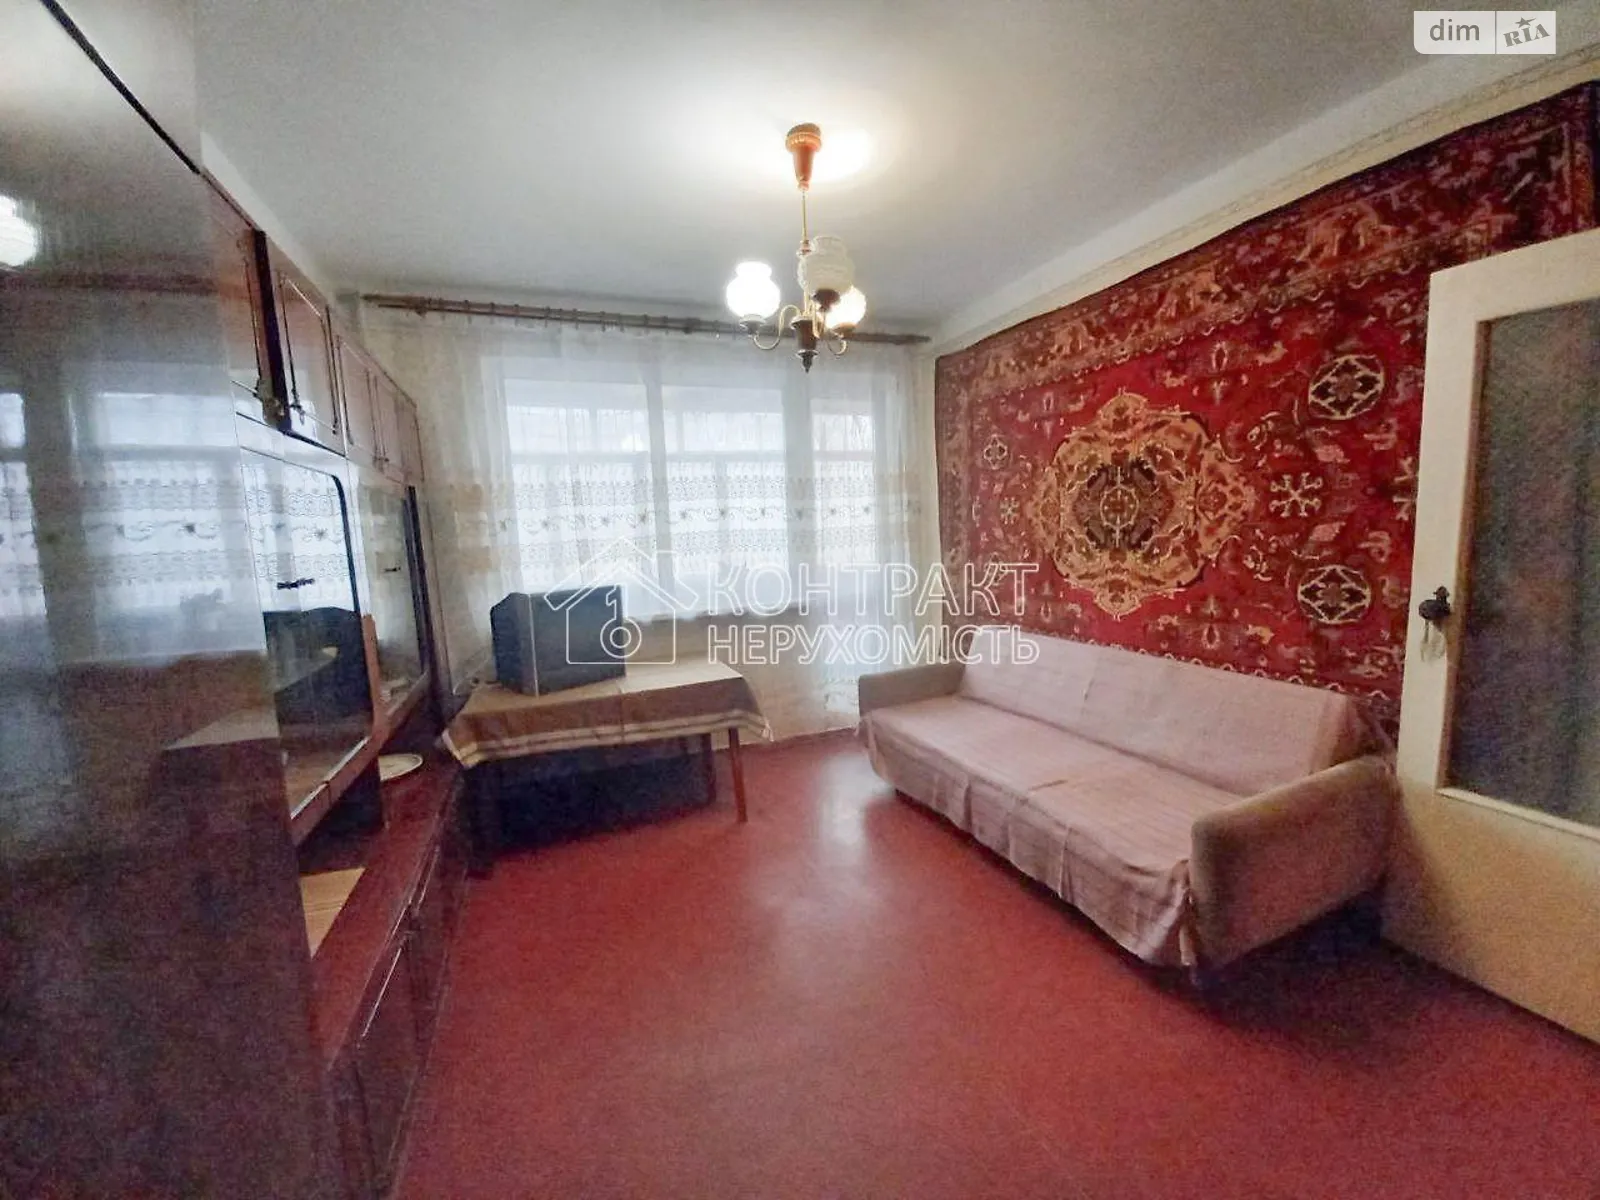 Сдается в аренду 1-комнатная квартира 38 кв. м в Харькове, цена: 3000 грн - фото 1